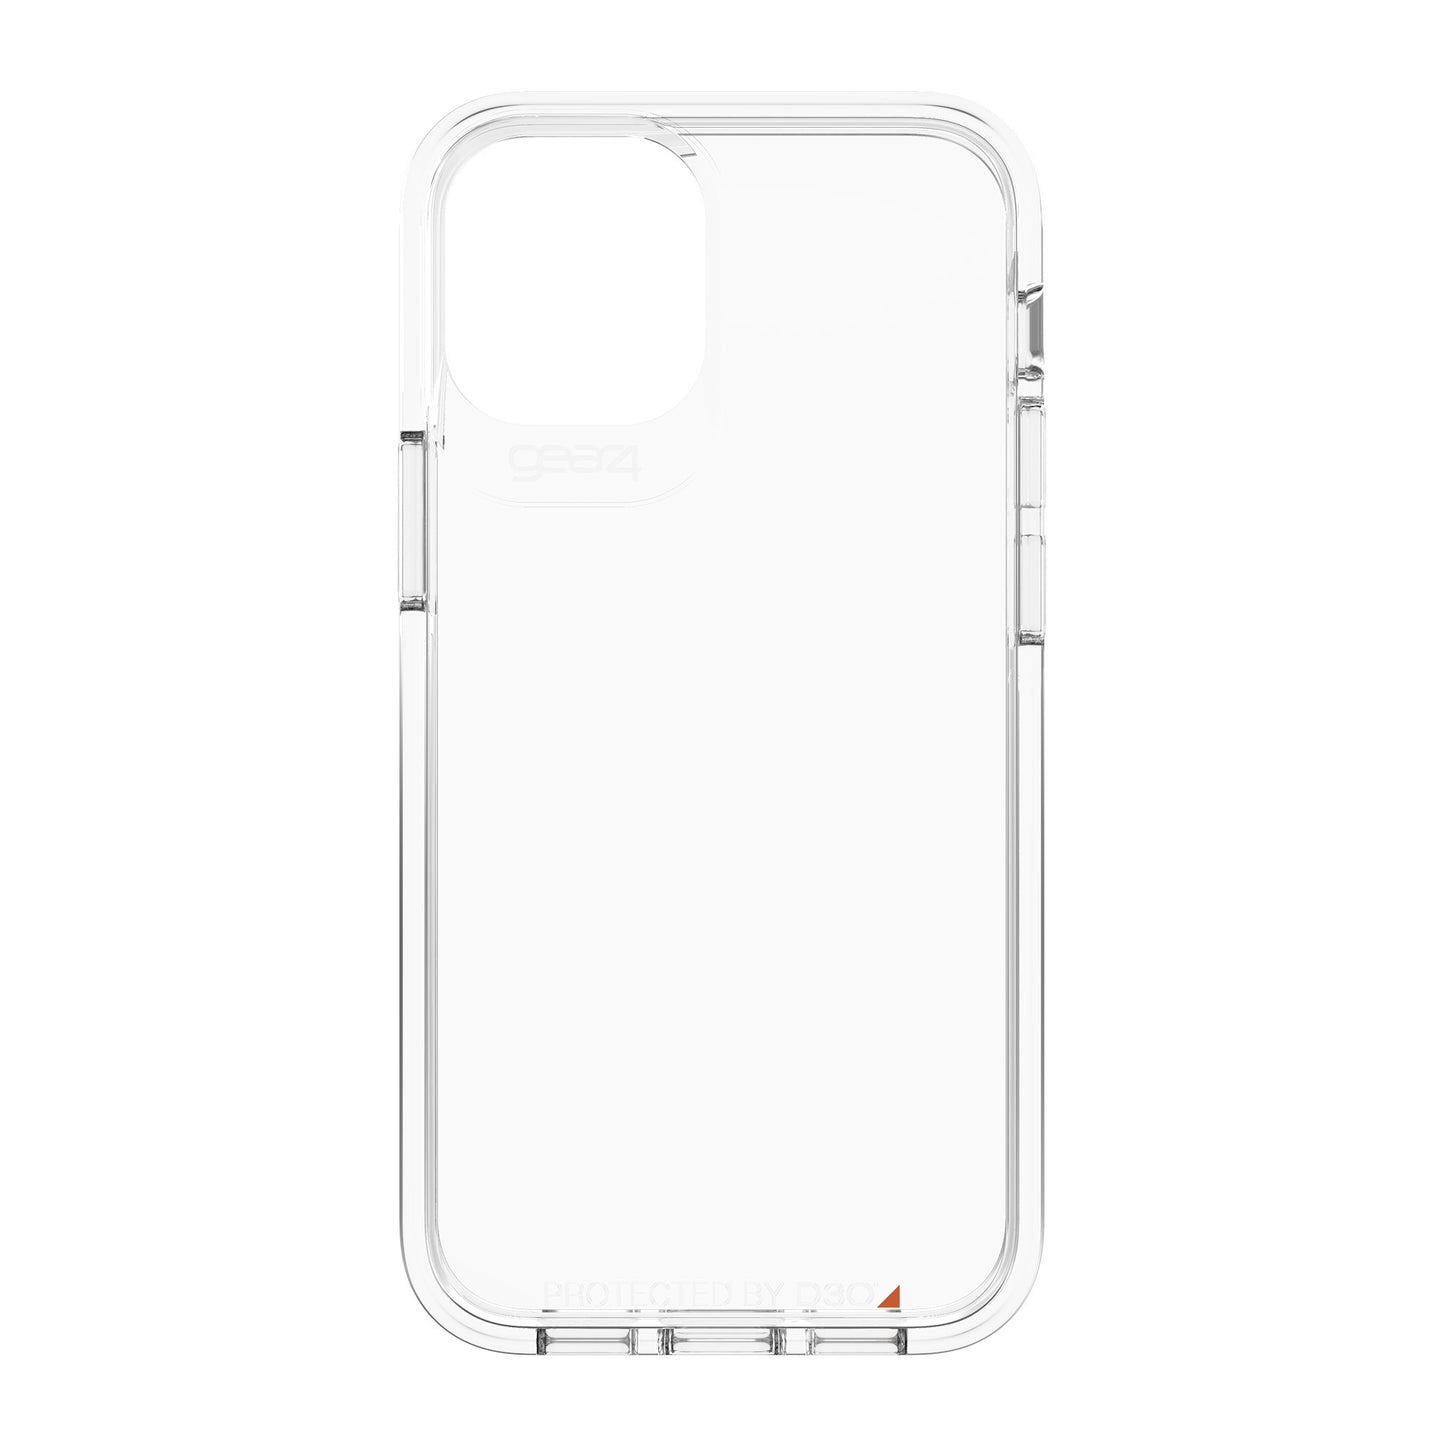 iPhone 12 Mini Gear4 D3O Clear Crystal Palace Case - 15-07670